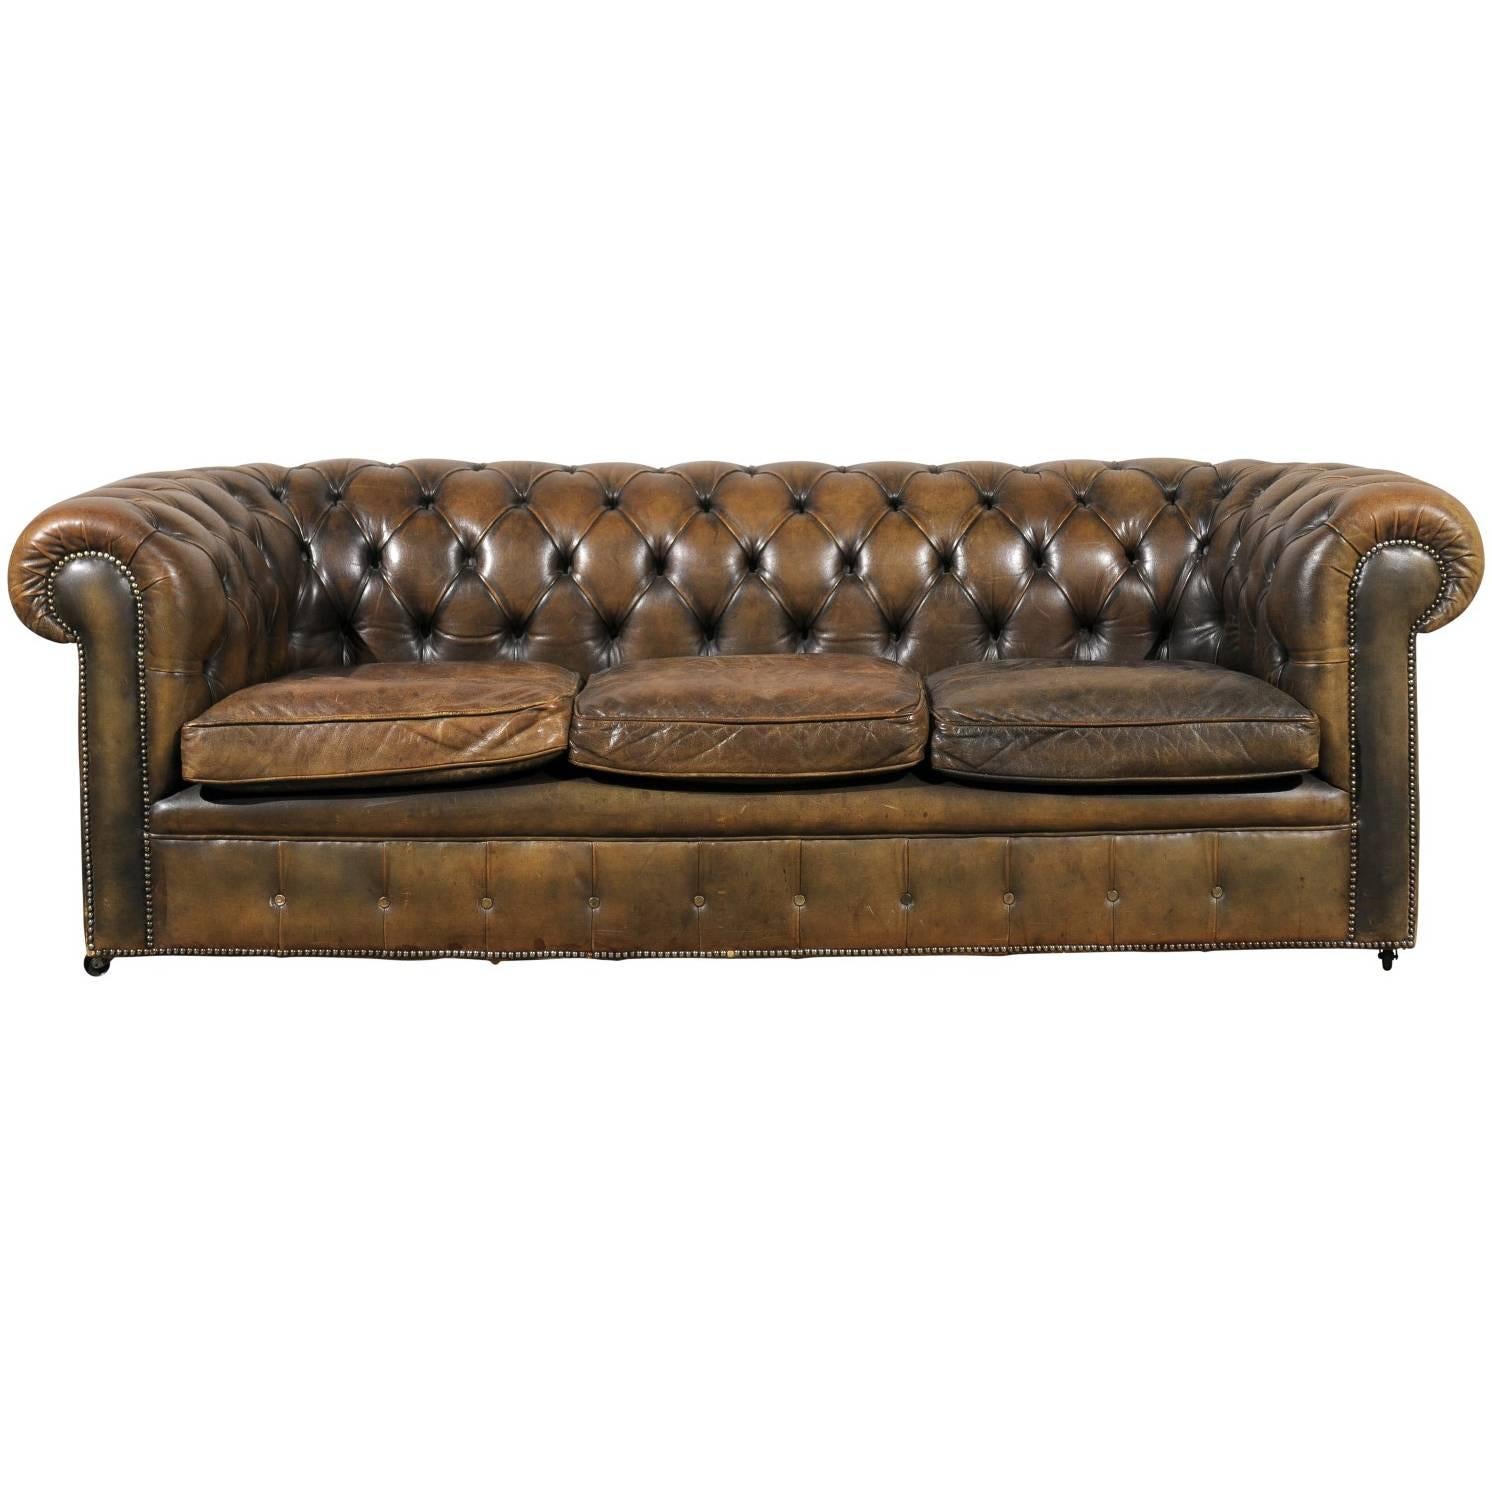 20th Century English Chesterfield Sofa